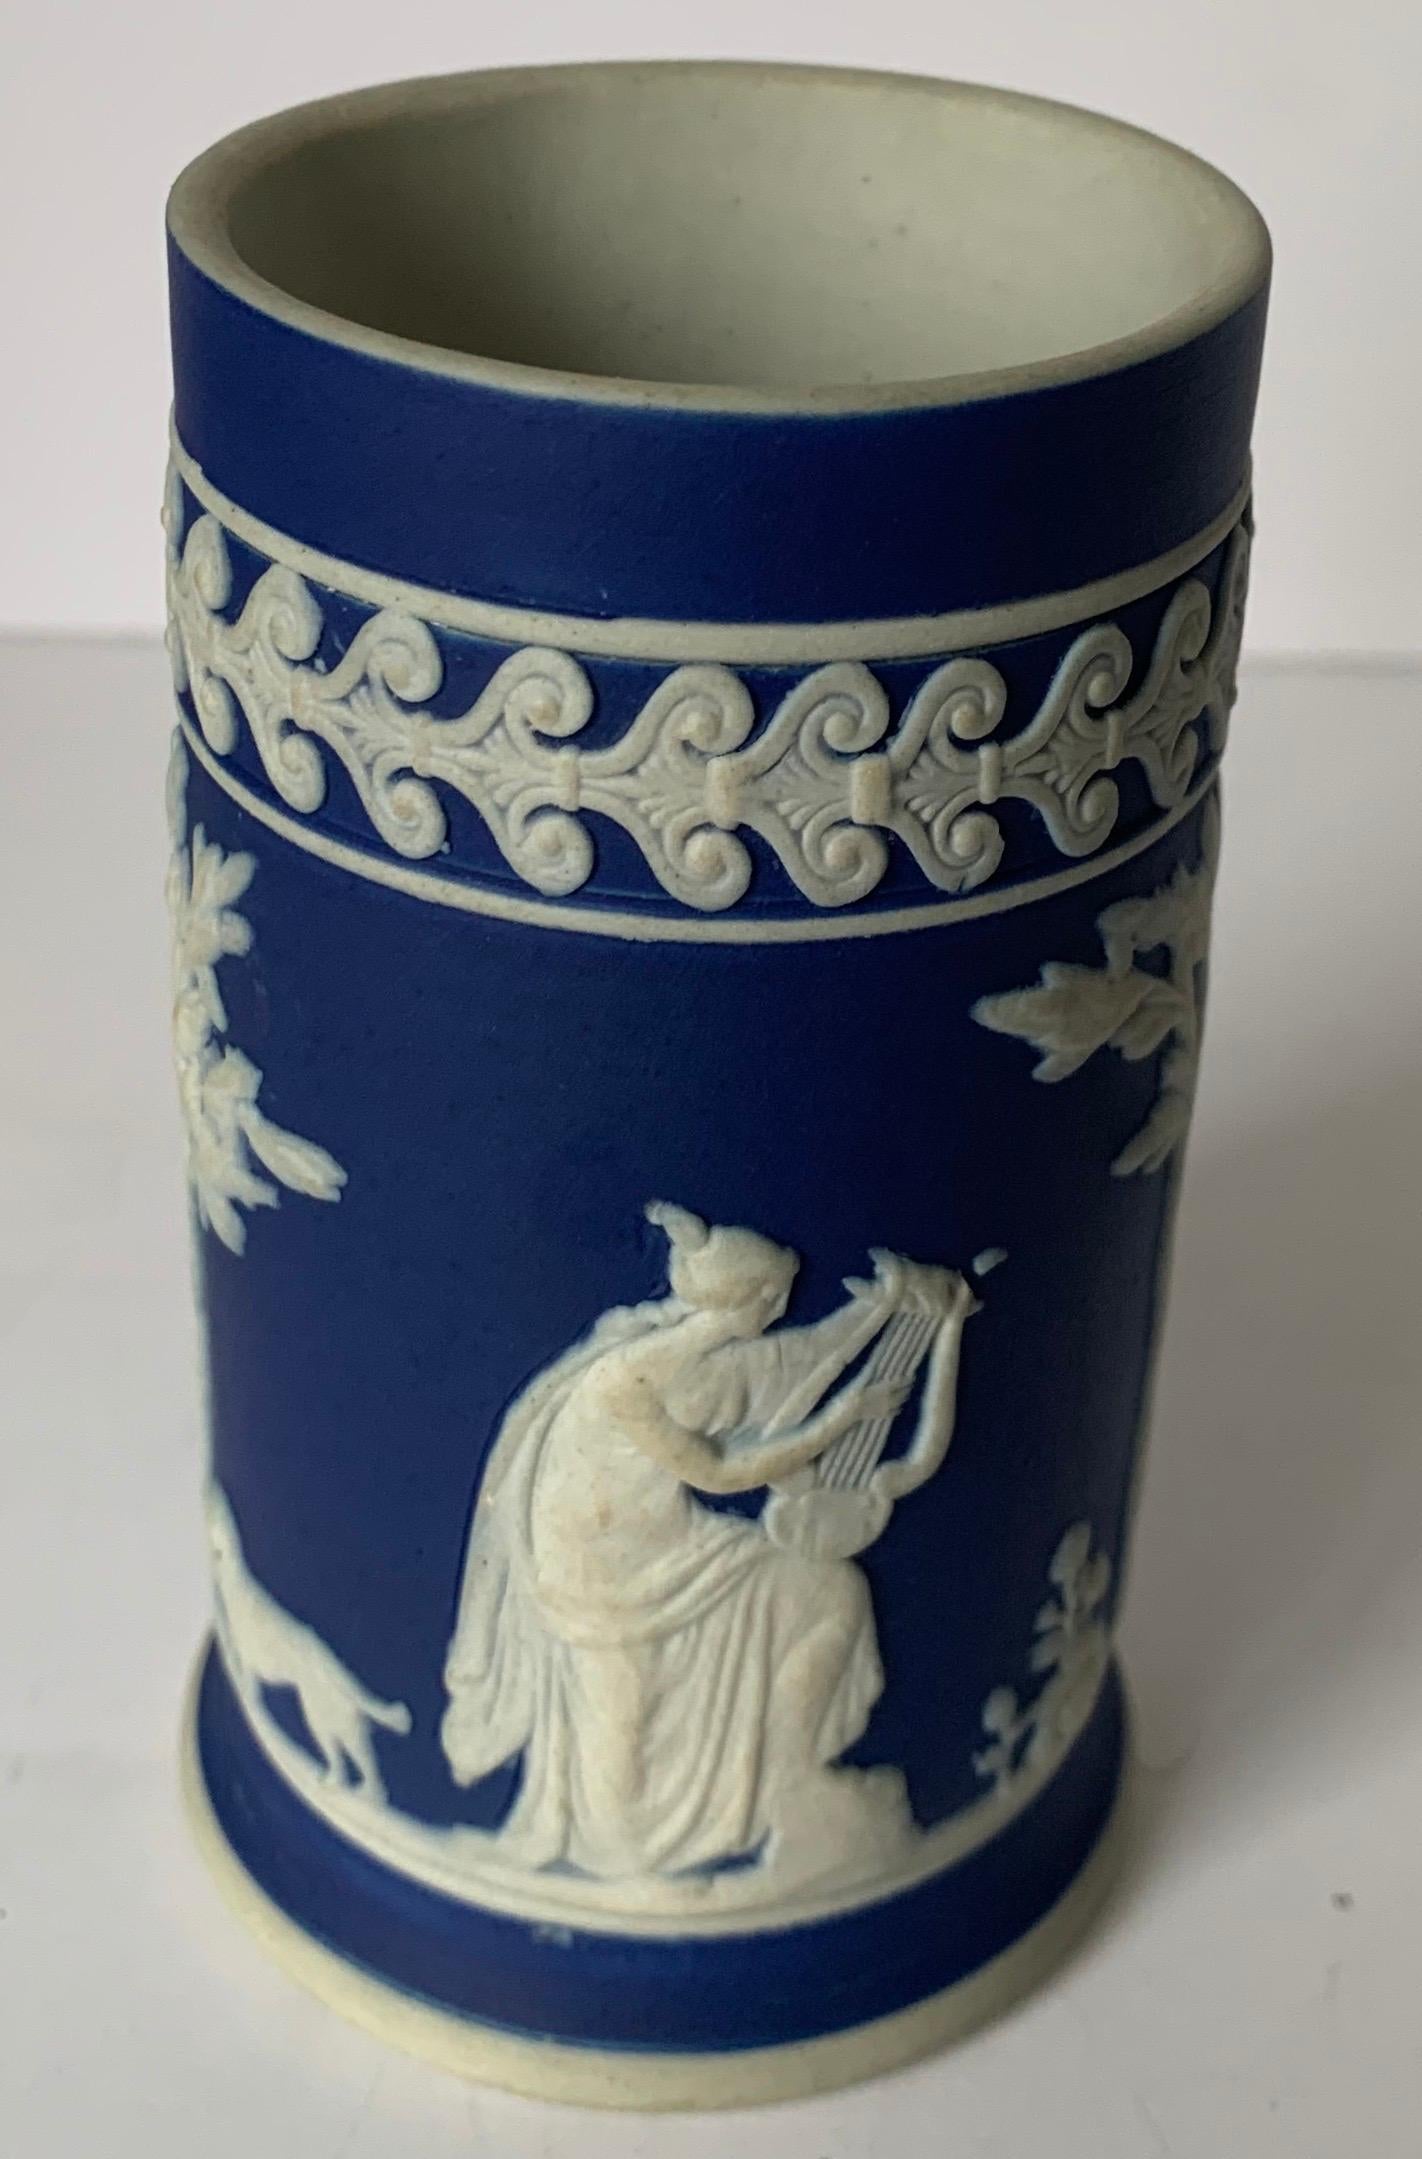 Small dark blue Wedgwood jasperware spill vase. Overall neoclassical motif. Stamped on the underside.